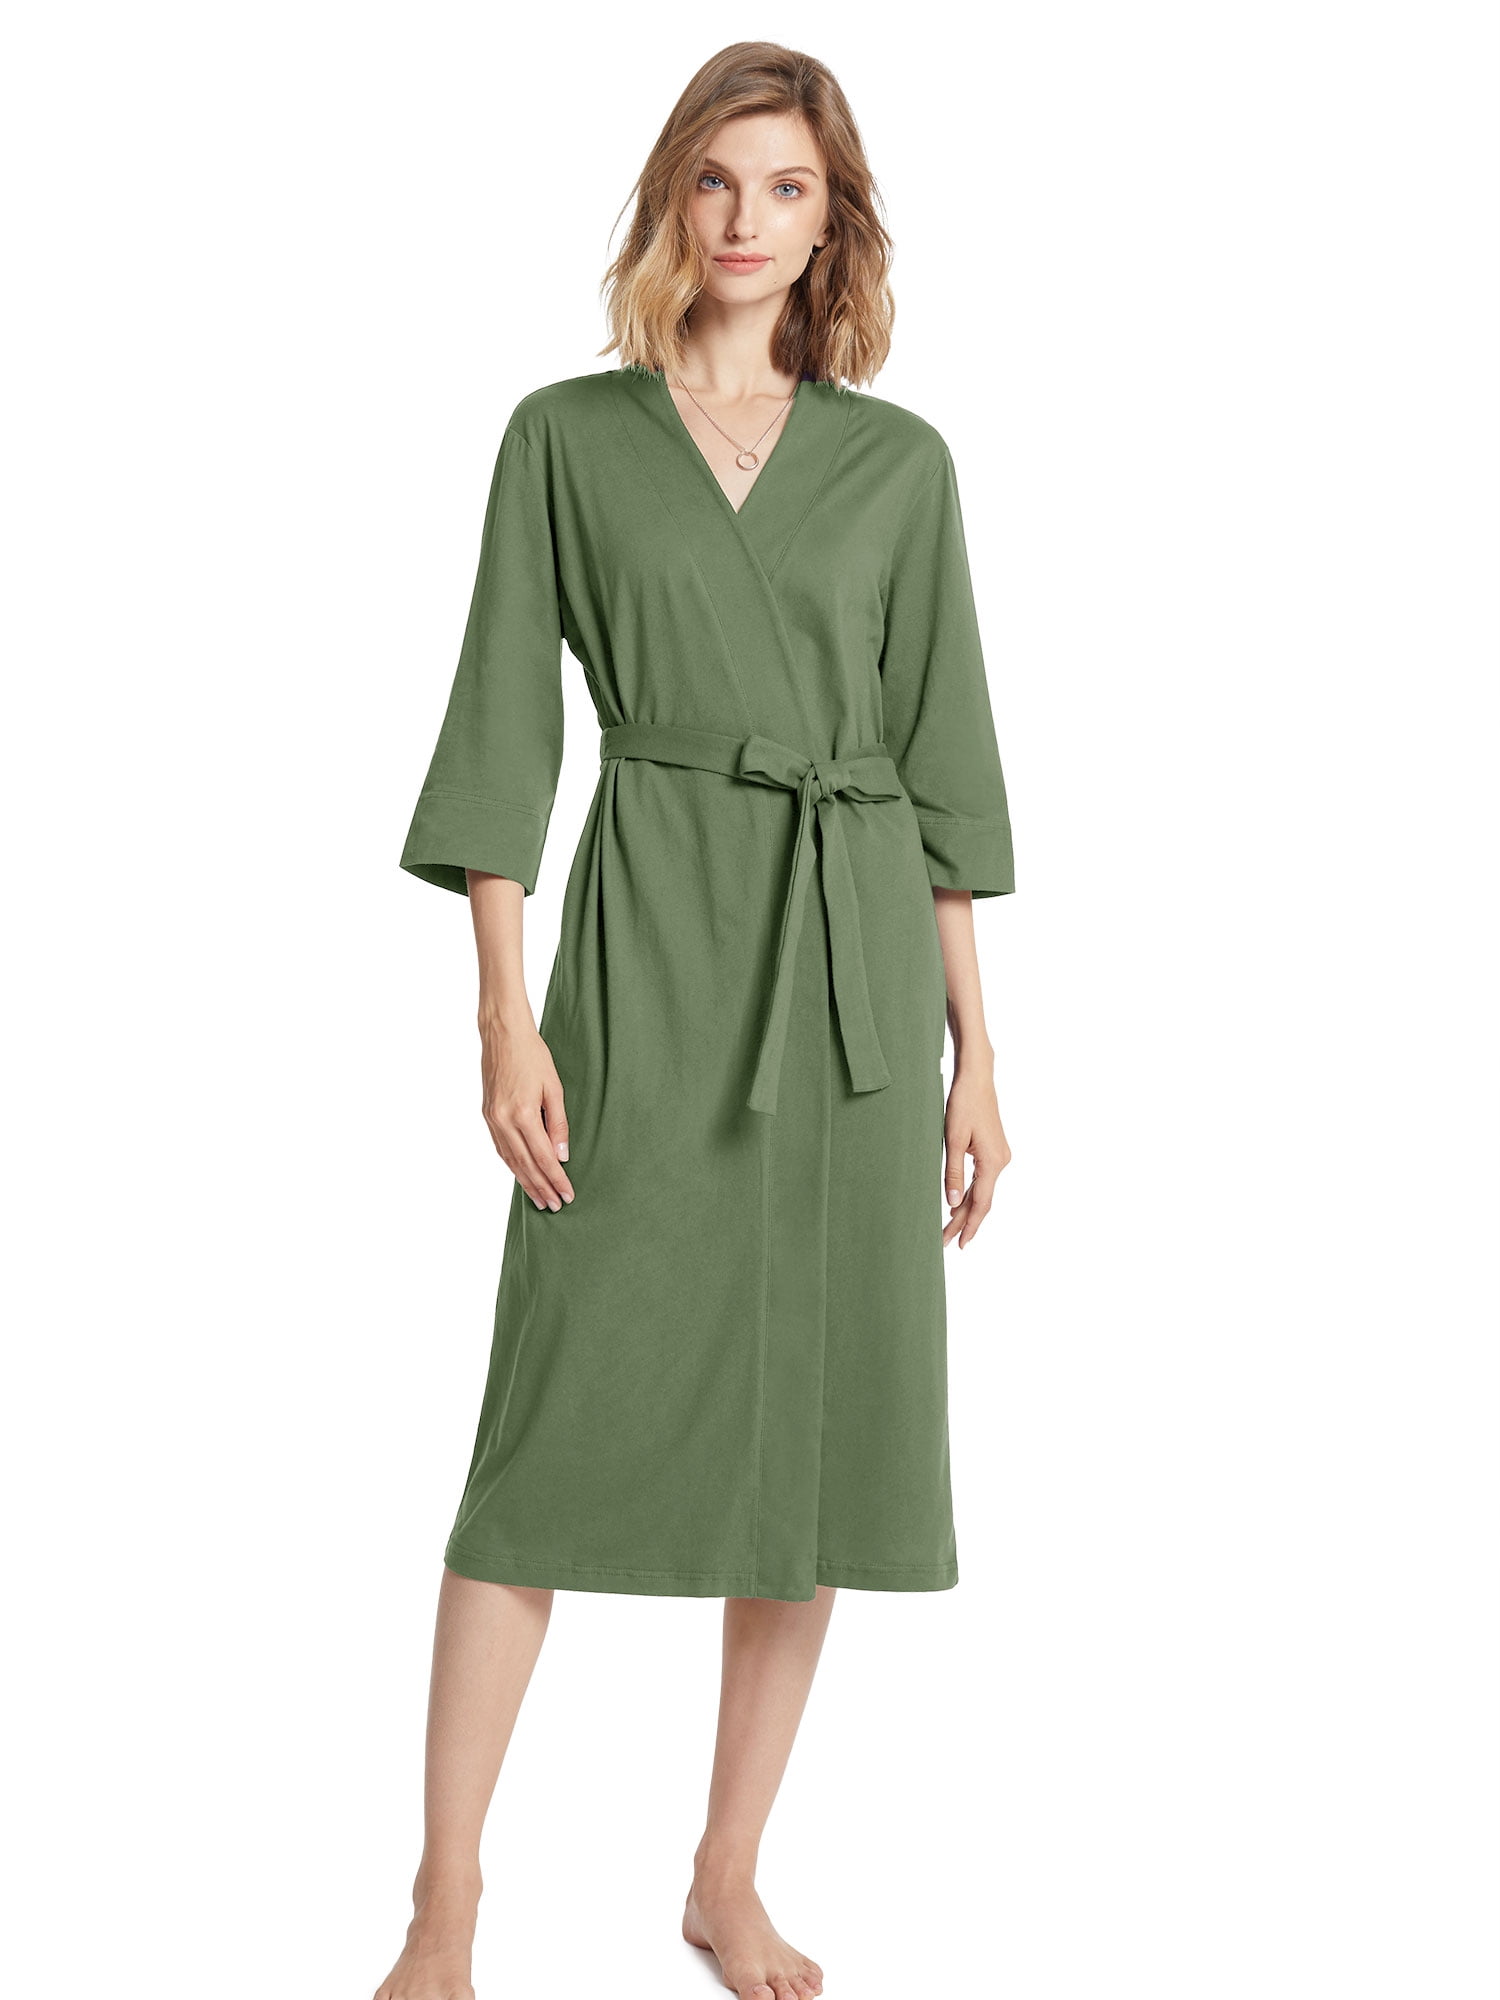 SIORO Womens Robe Terry Cloth Bathrobe Cotton Soft Warm Shawl Collar Housecoat Calf Length Hotel Spa Sleepwear with Pockets